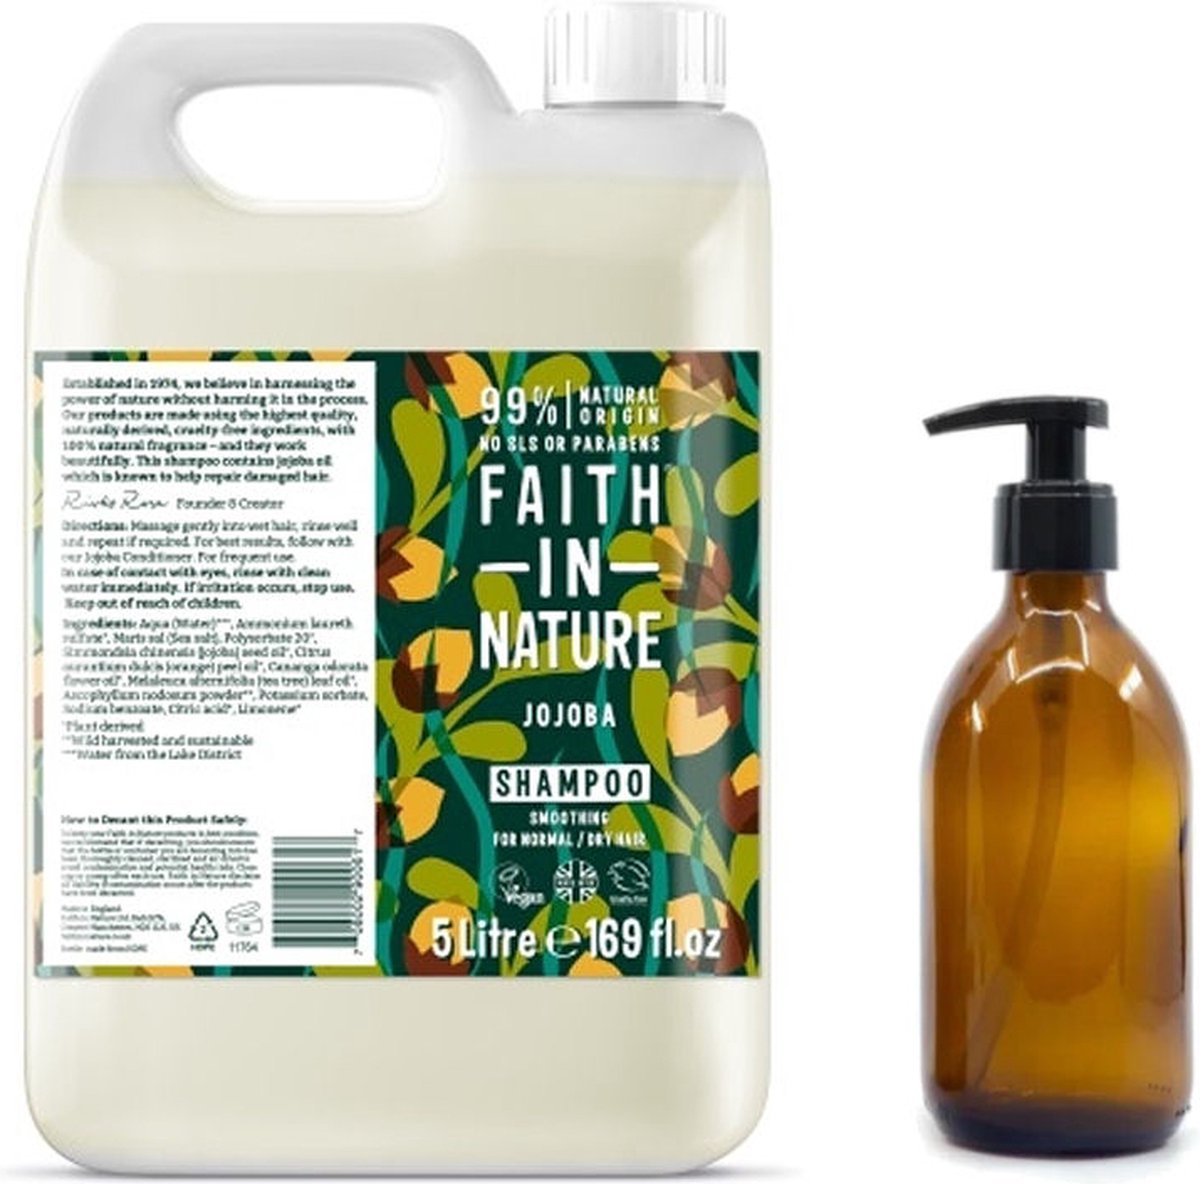 FAITH IN NATURE - Shampoo Jojoba Refill 5 Liter - nu met GRATIS glaze refill fles 500ml